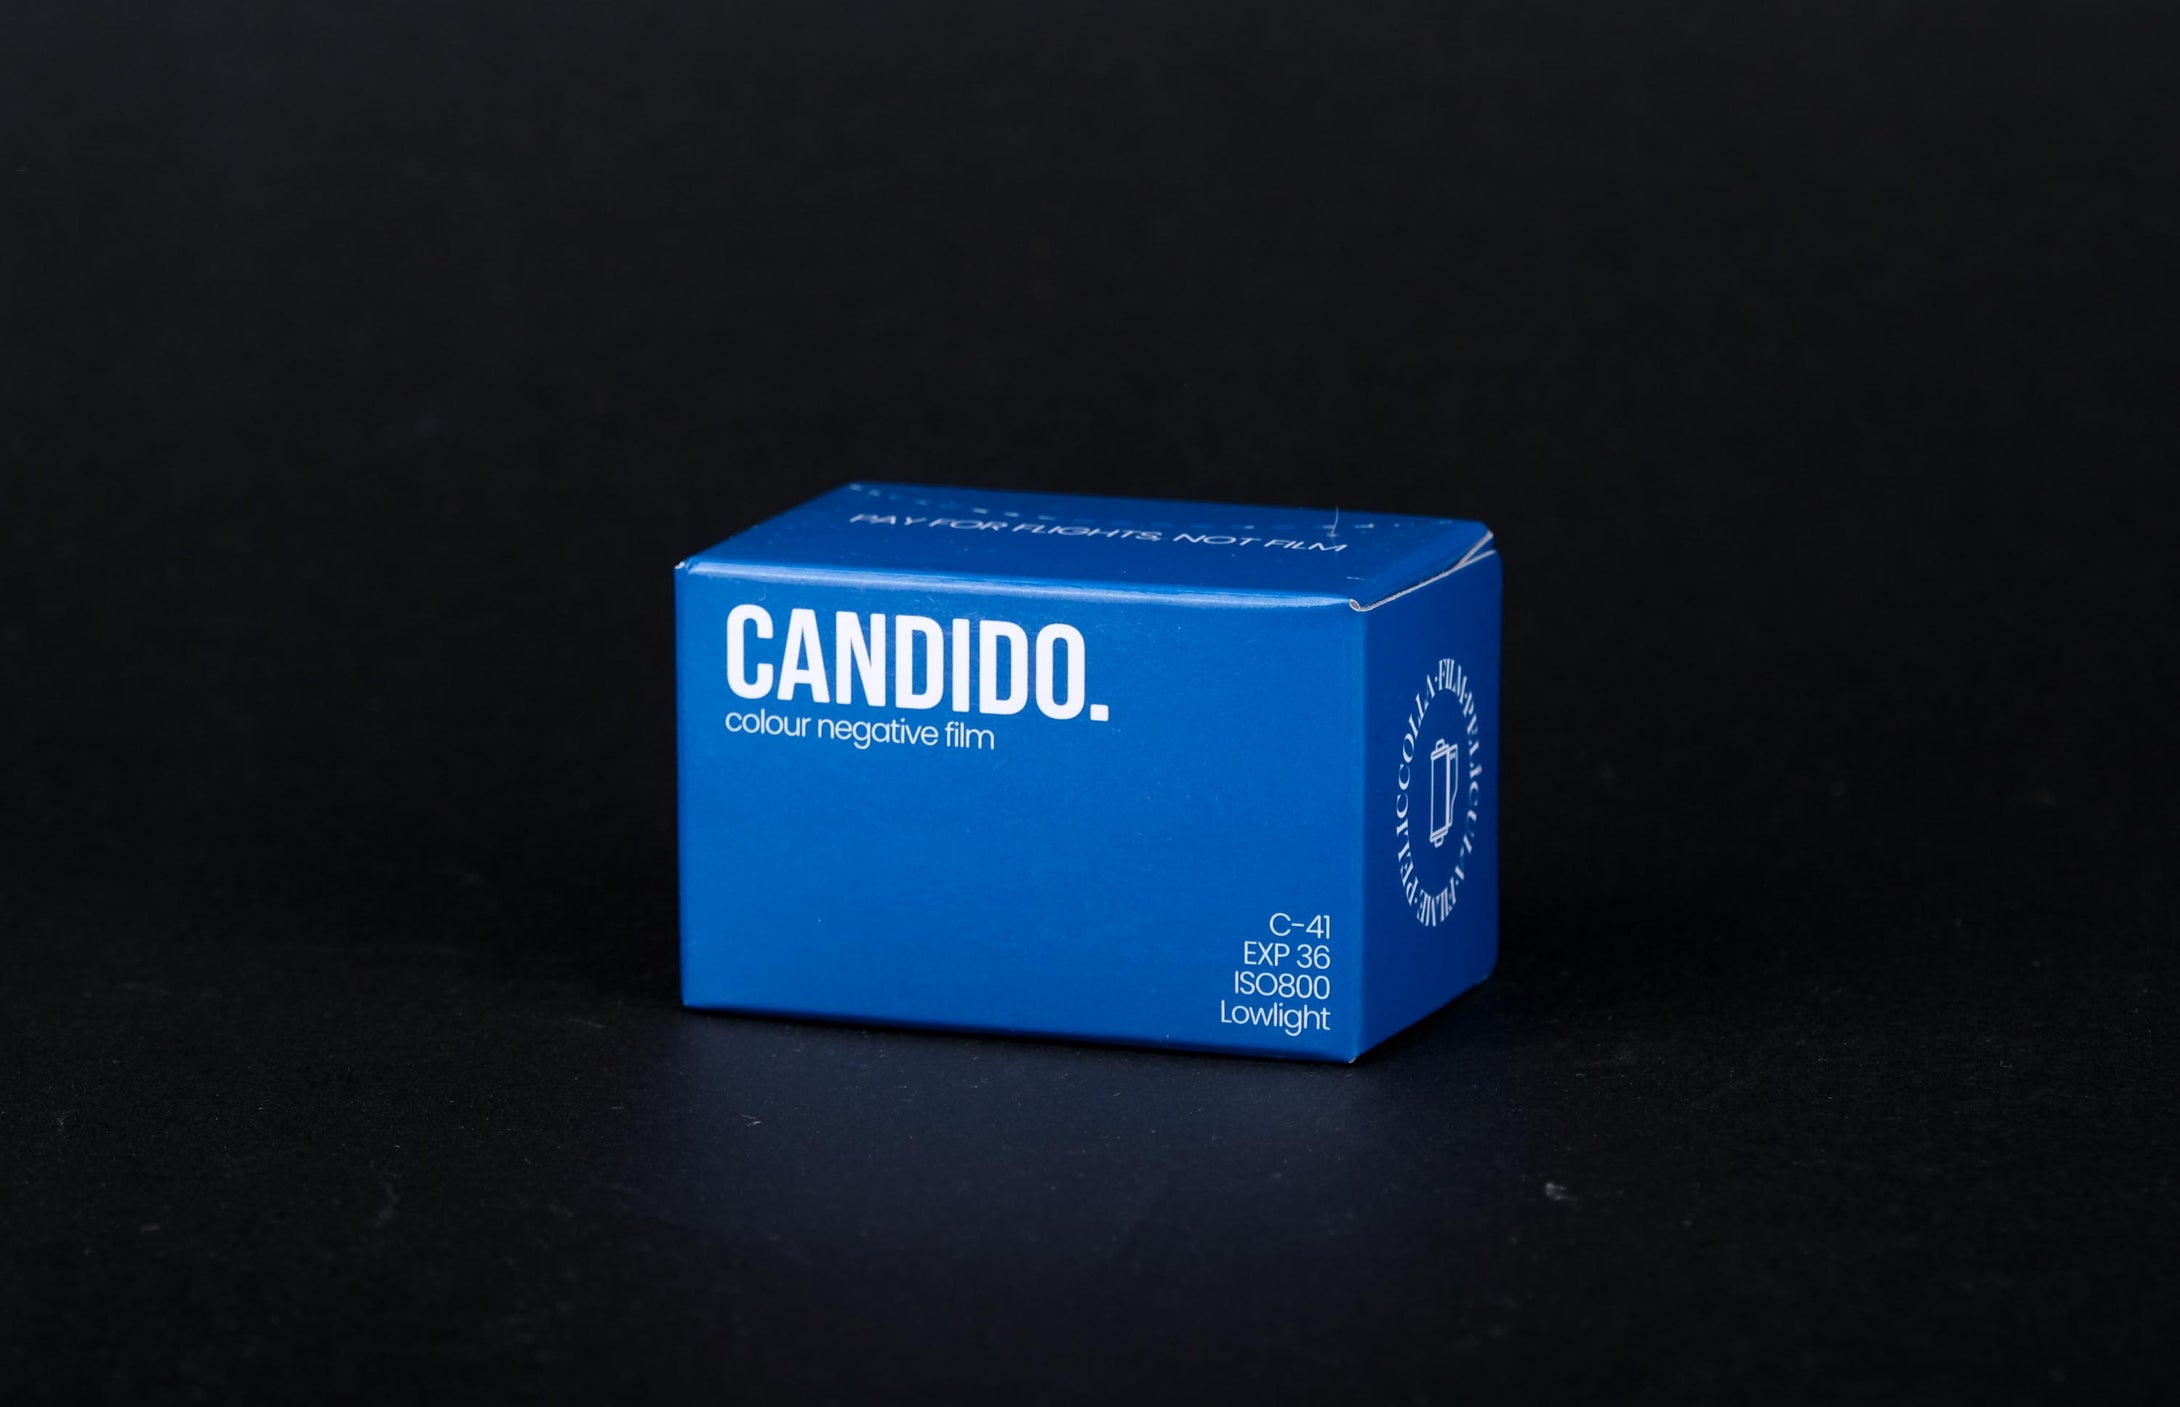 CANDIDO 800 35MM COLOUR FILM